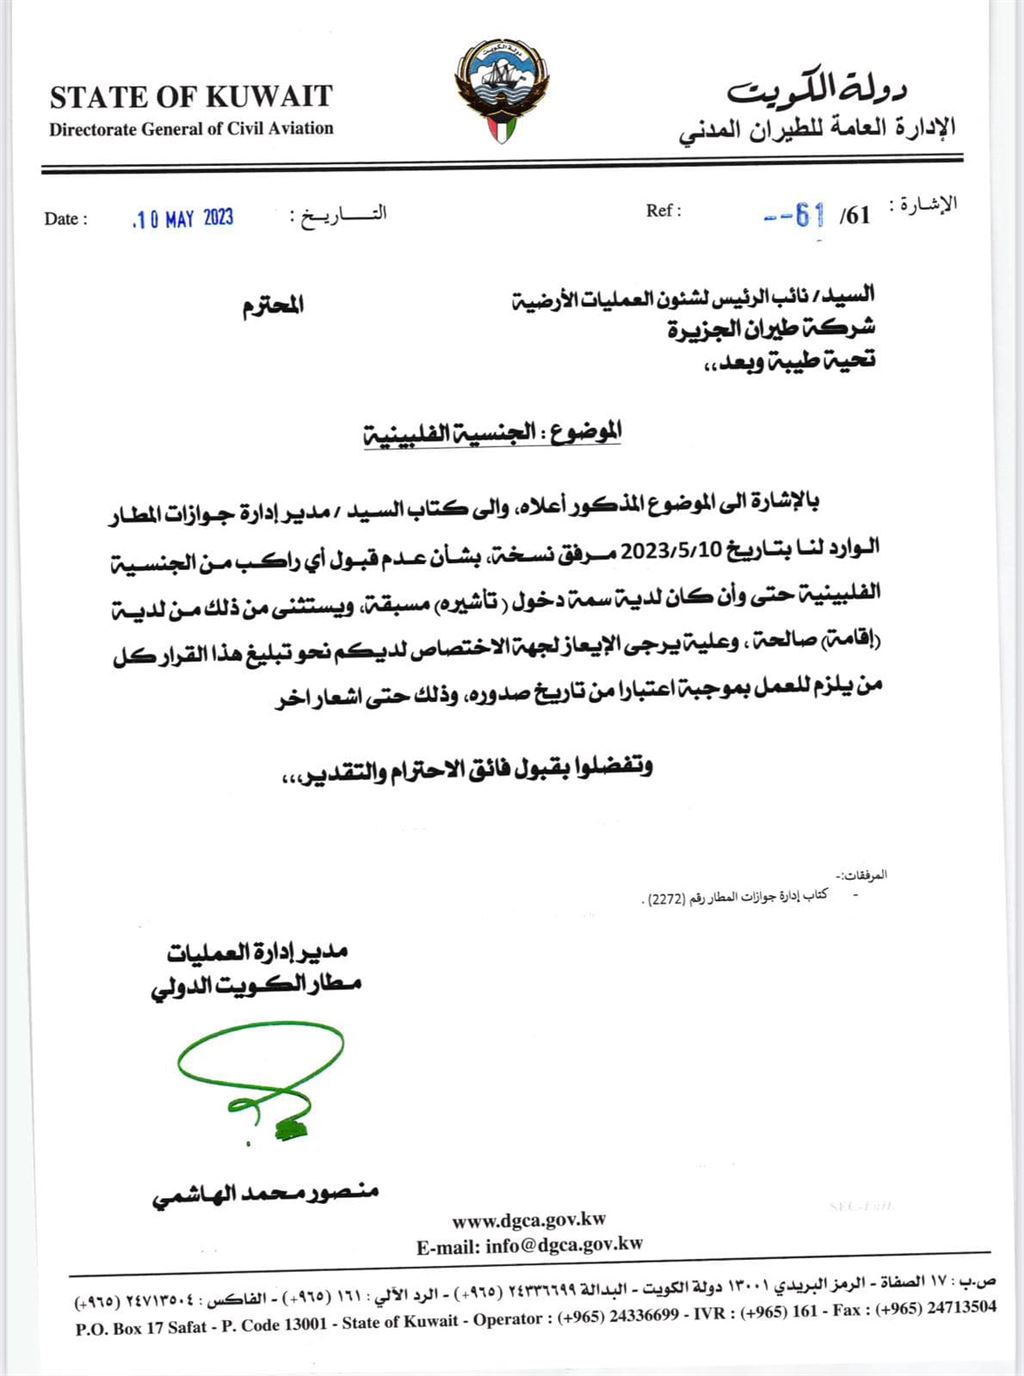 Kuwait Bans Entry of Fiilippinos